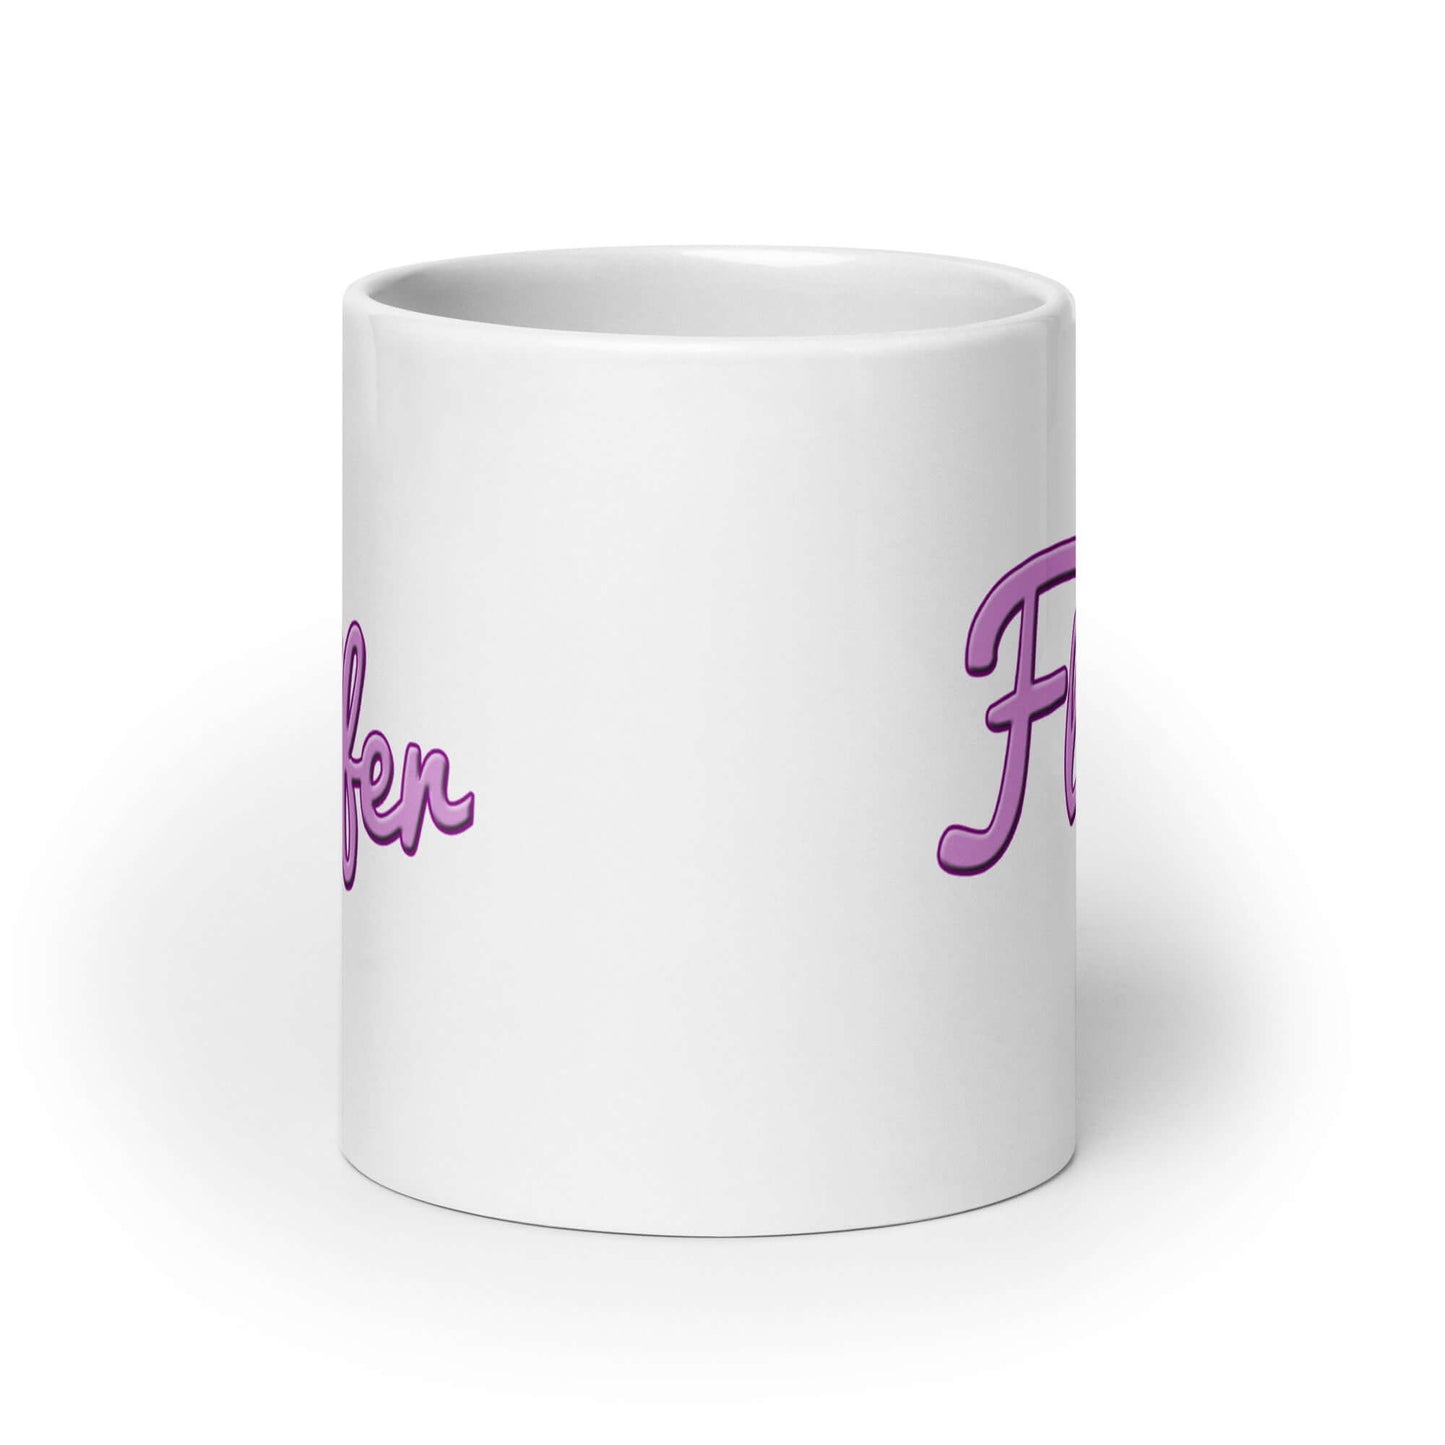 Fluffer ceramic coffee mug.